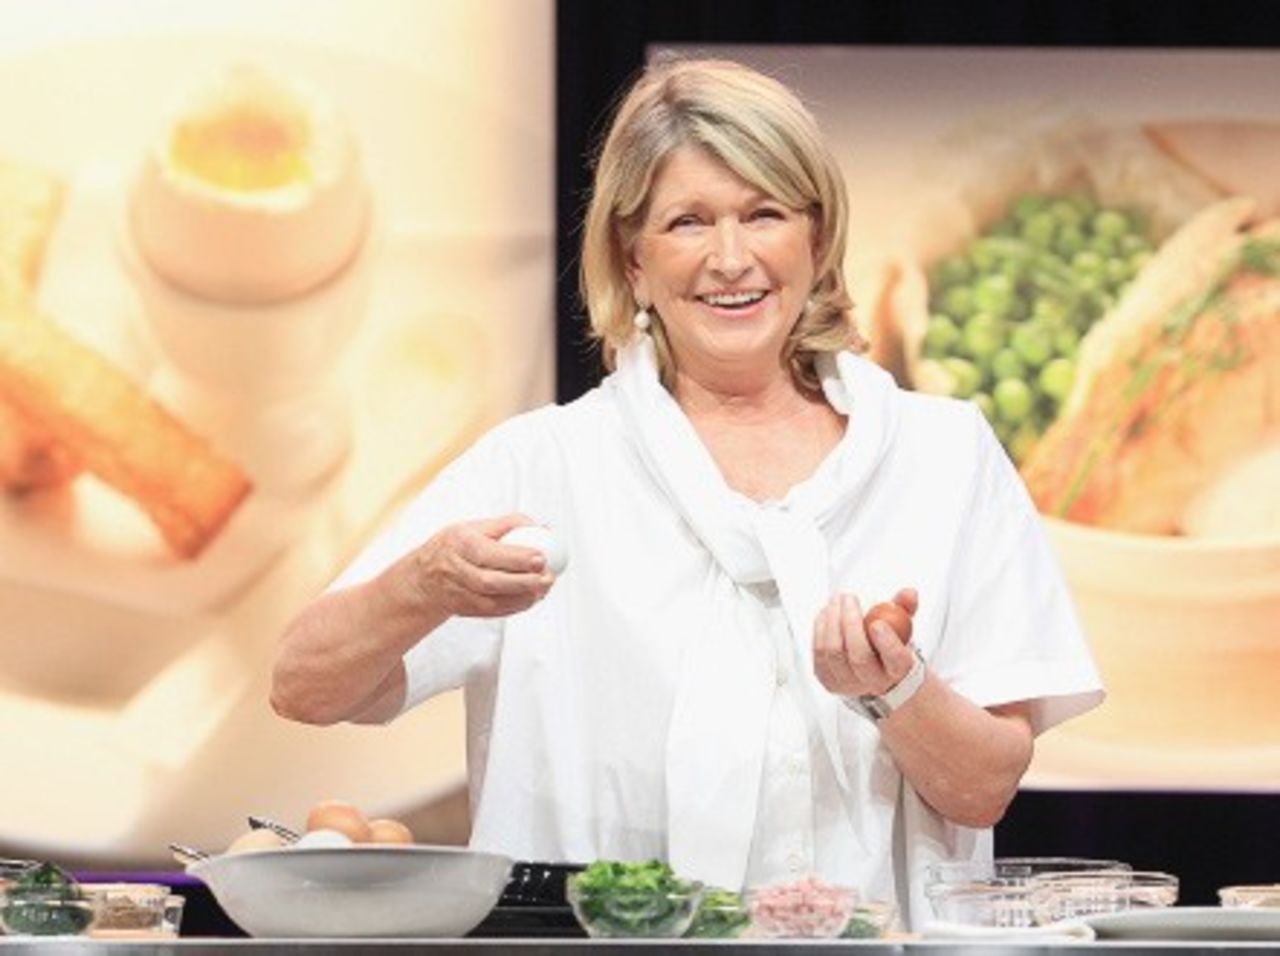 Martha Stewart demonstrates her cooking skills onstage last year in California.